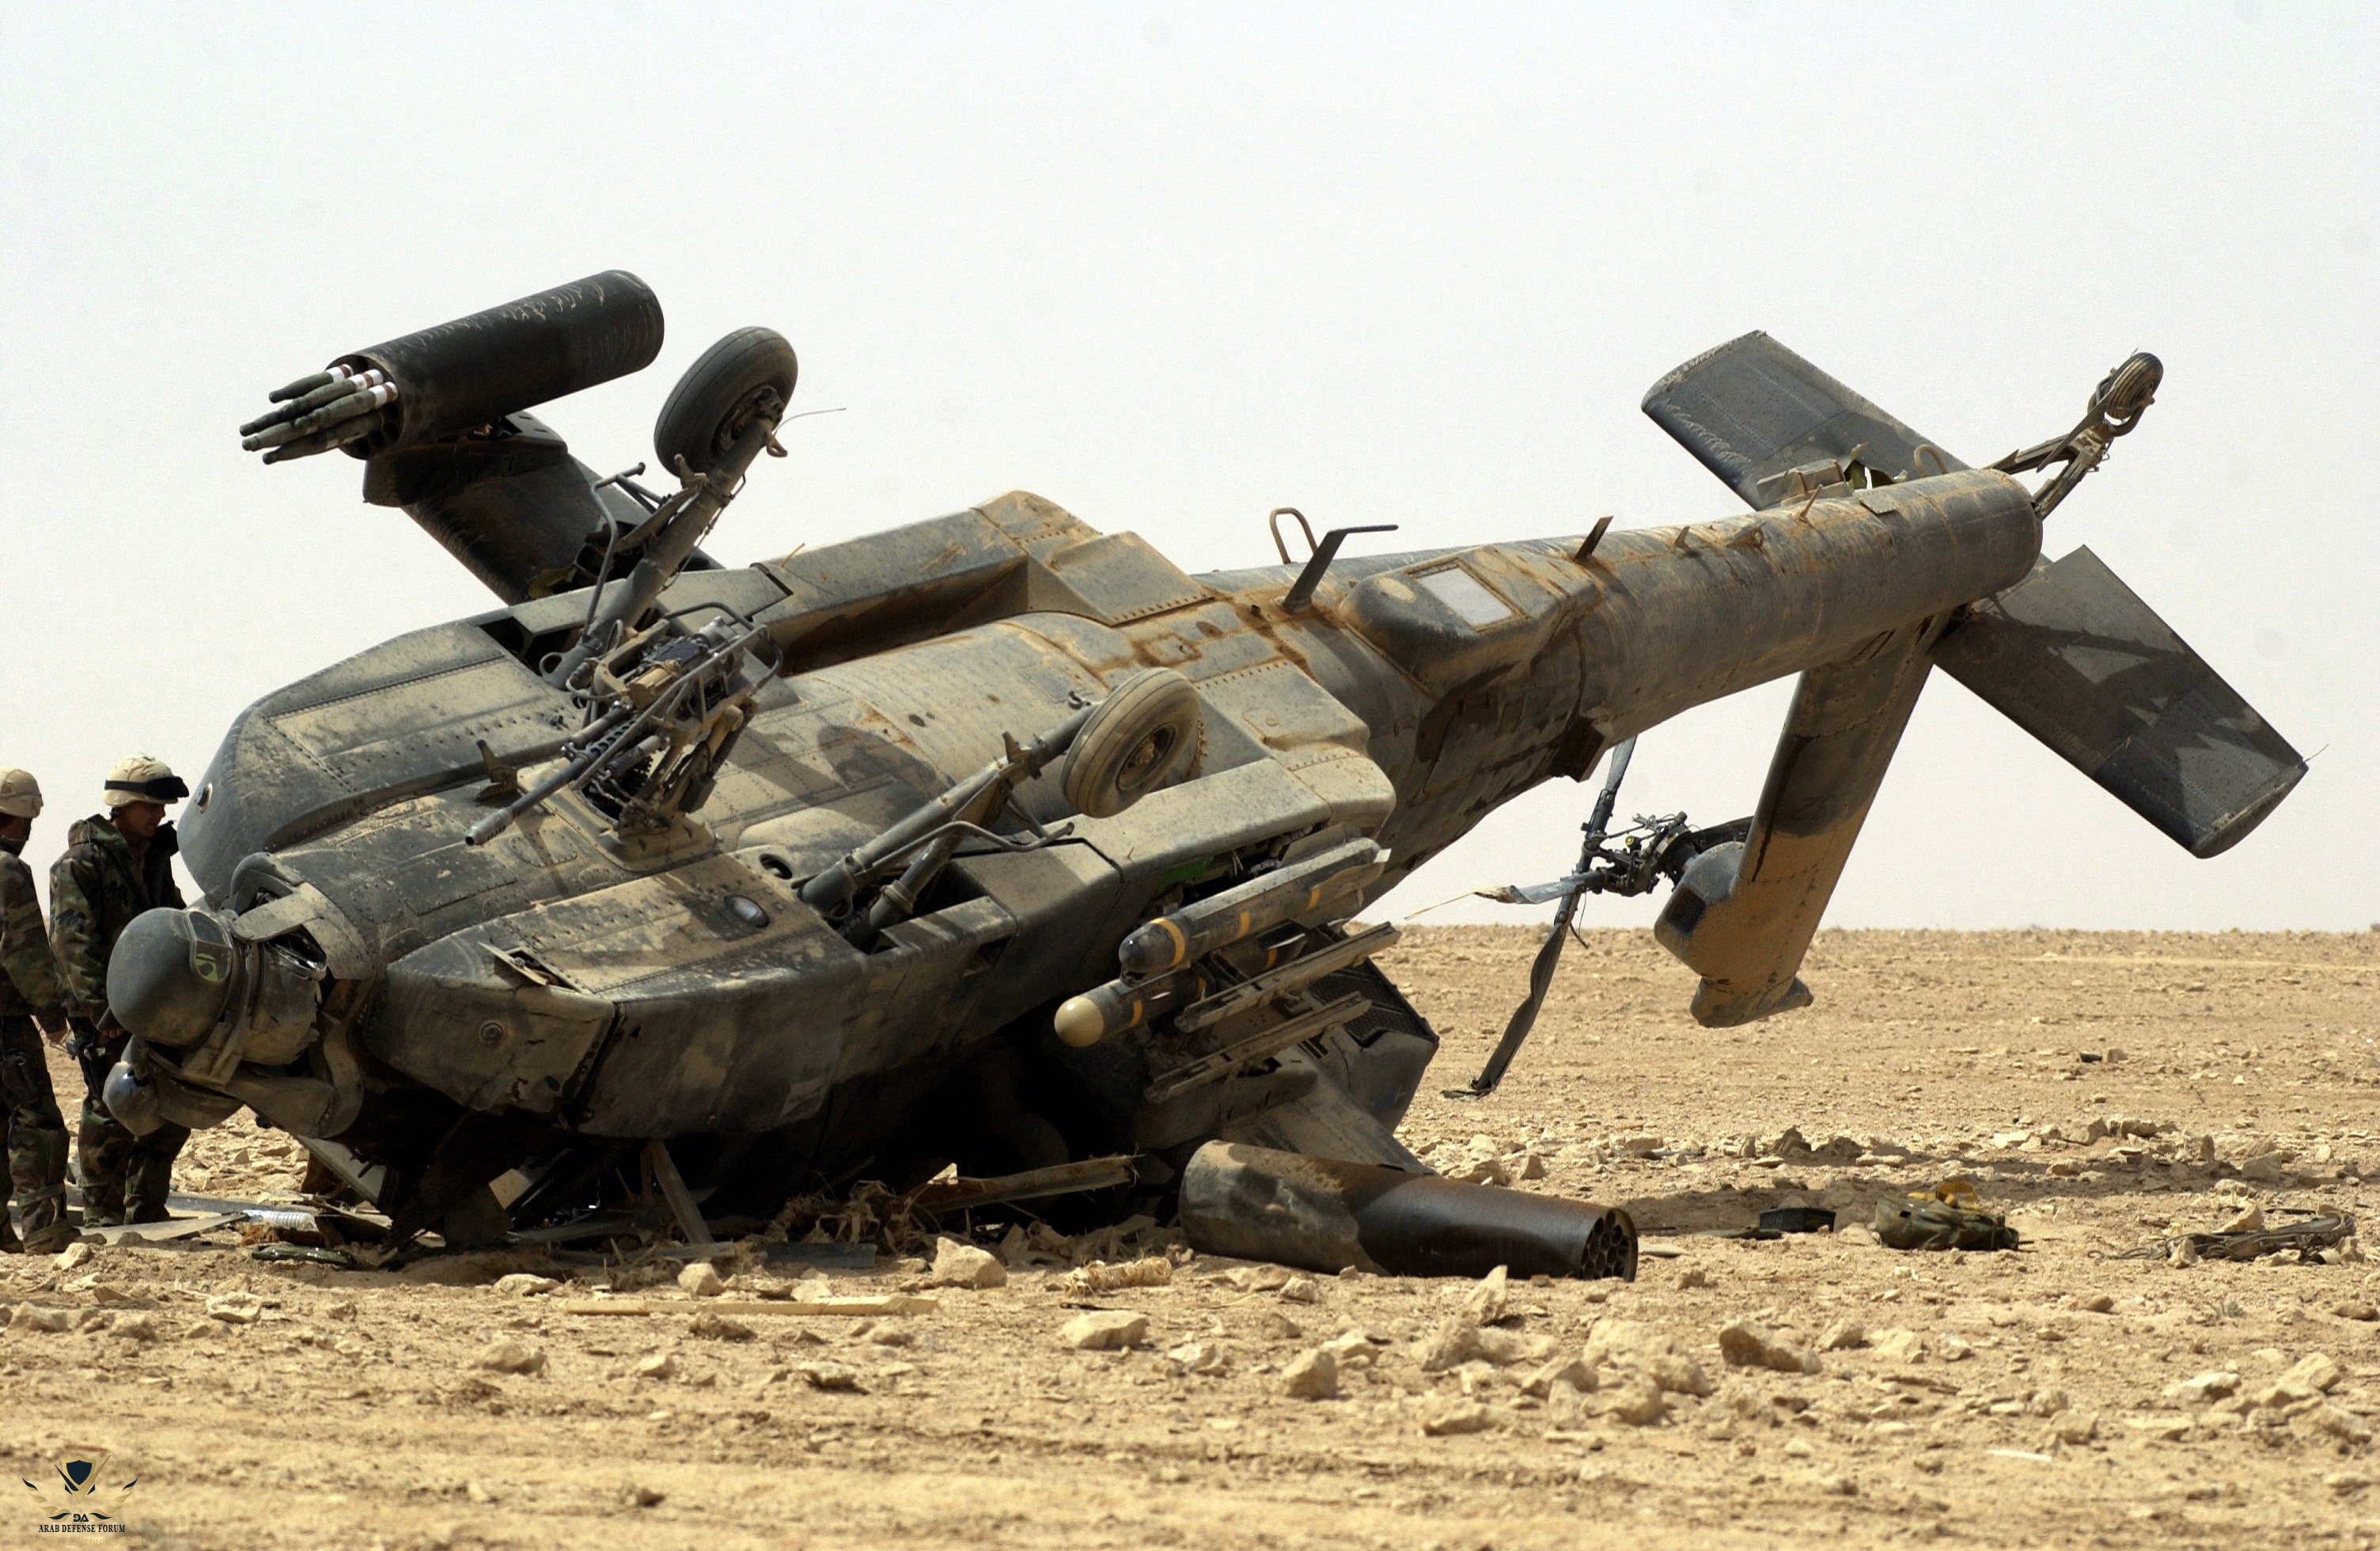 Damaged_US_Army_AH-64_Apache,_Iraq.jpg